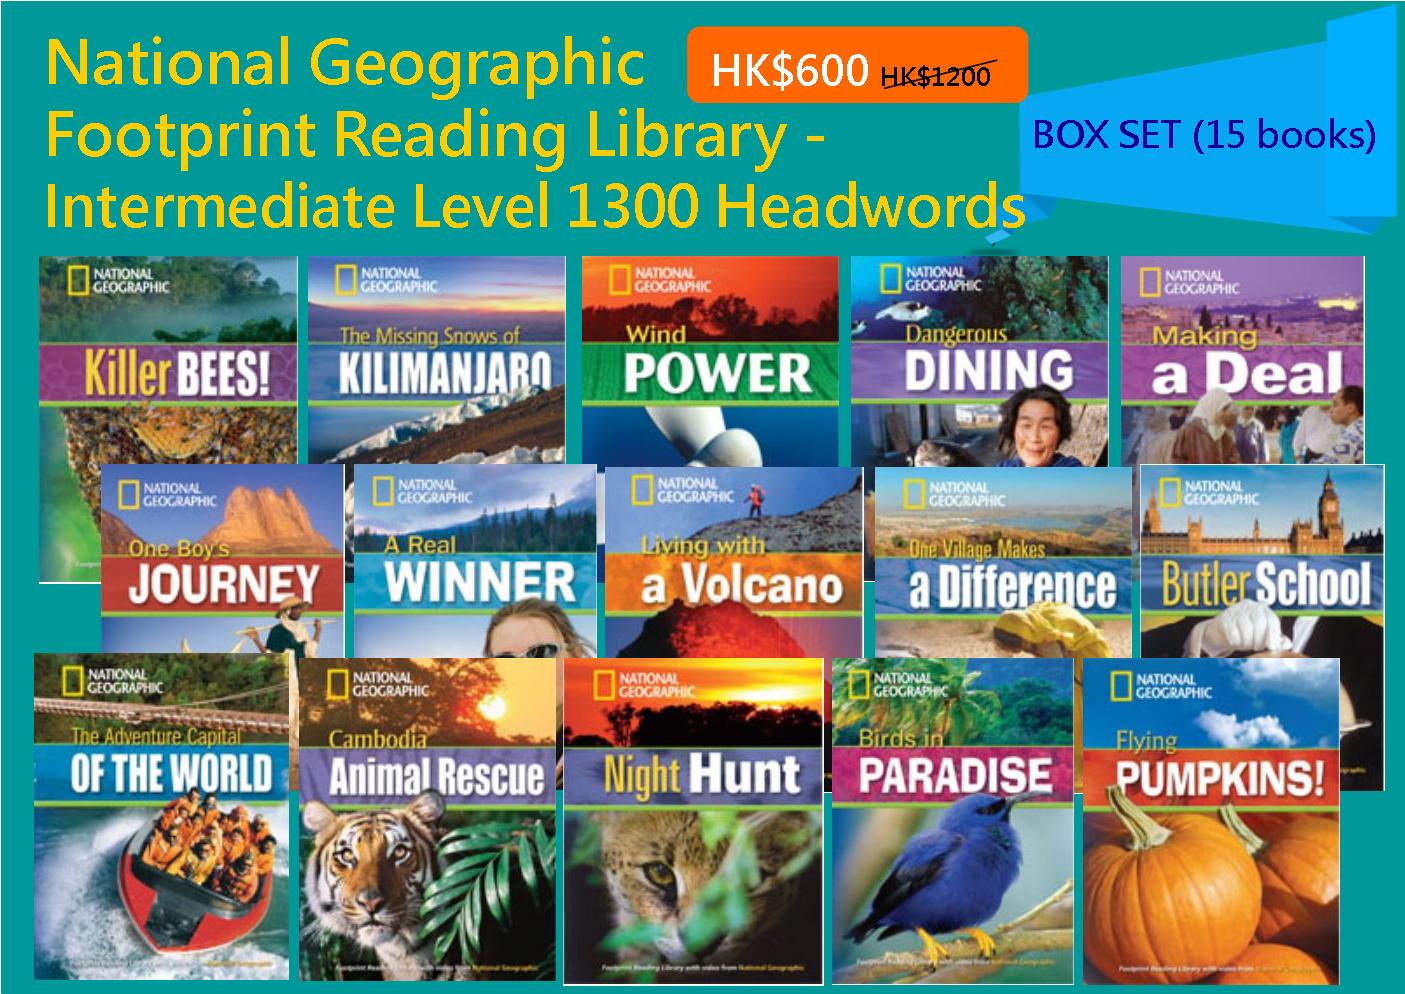 National Geographic Footprint Reading Library - Intermediate Level 1300 Headwords (Box Set - 15 books)